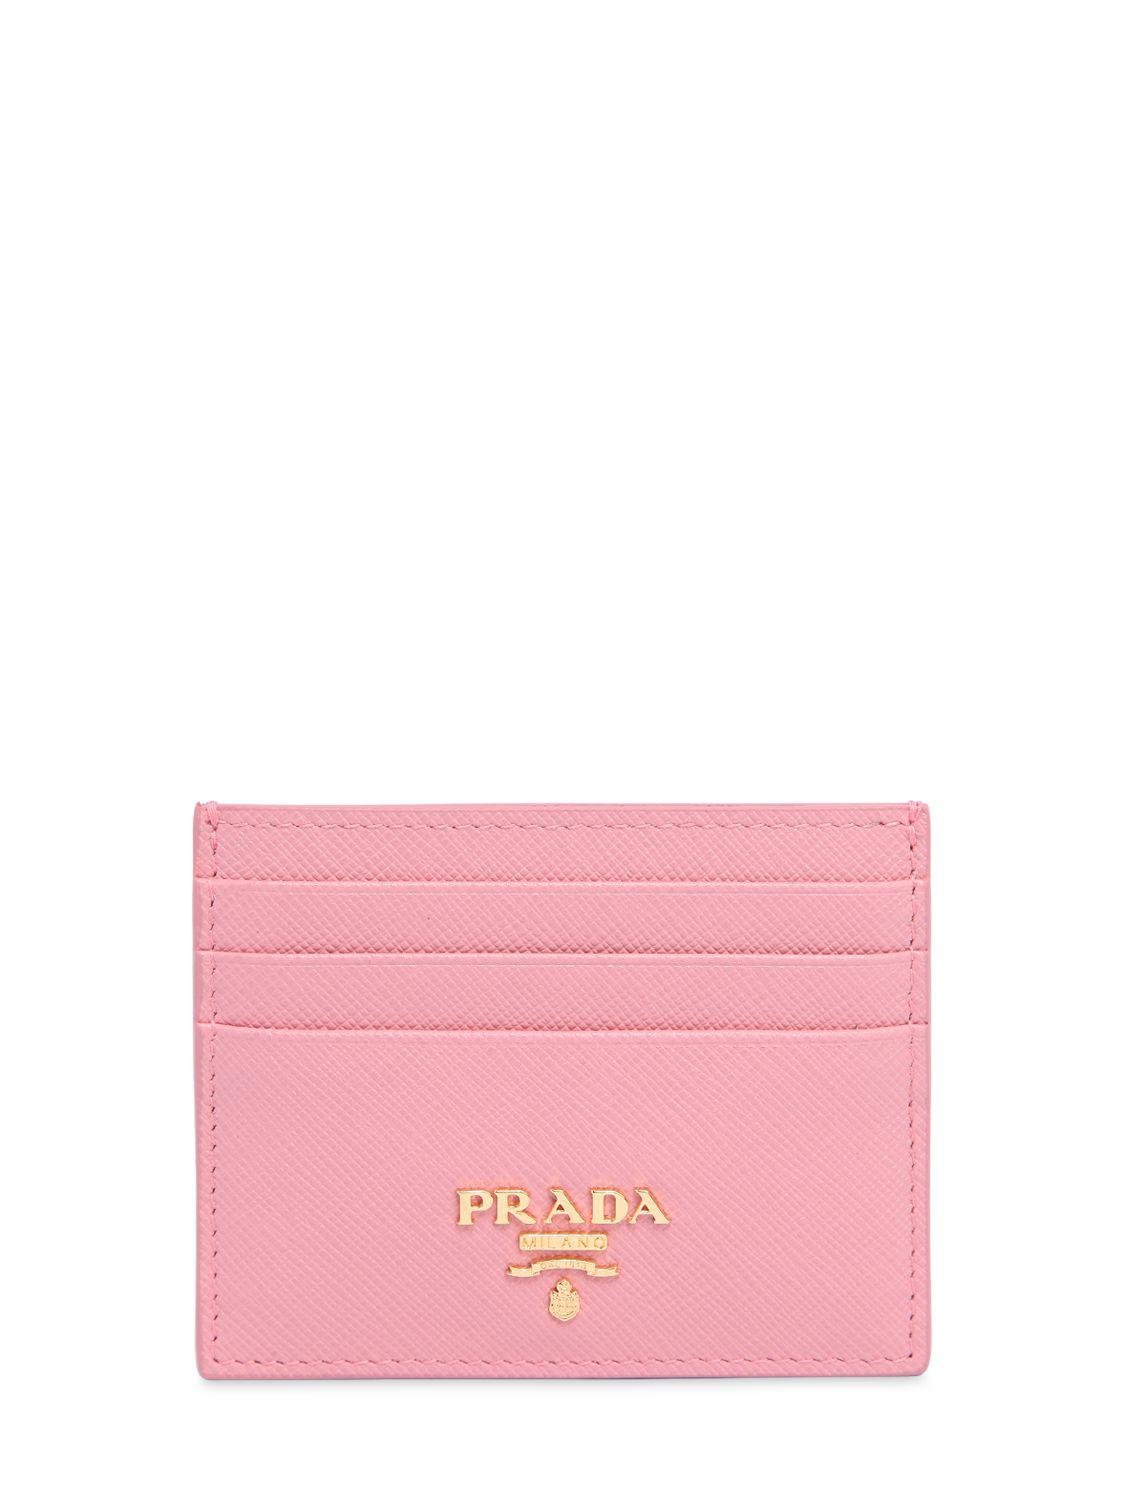 Prada Saffiano Leather Card Holder in Pink | Lyst